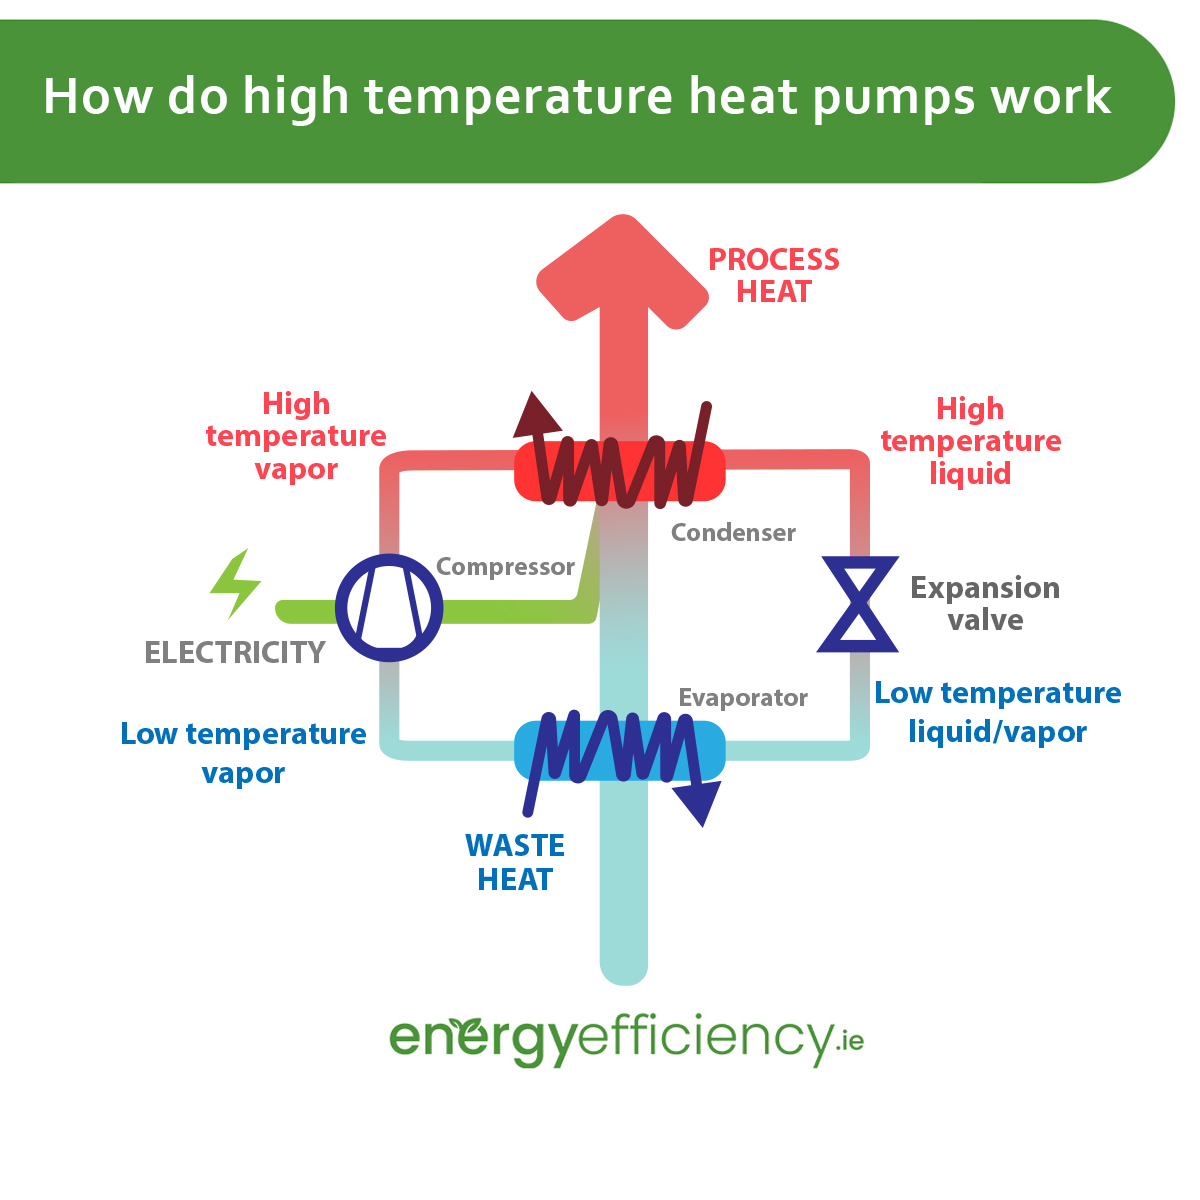 How do high temperature heat pumps work